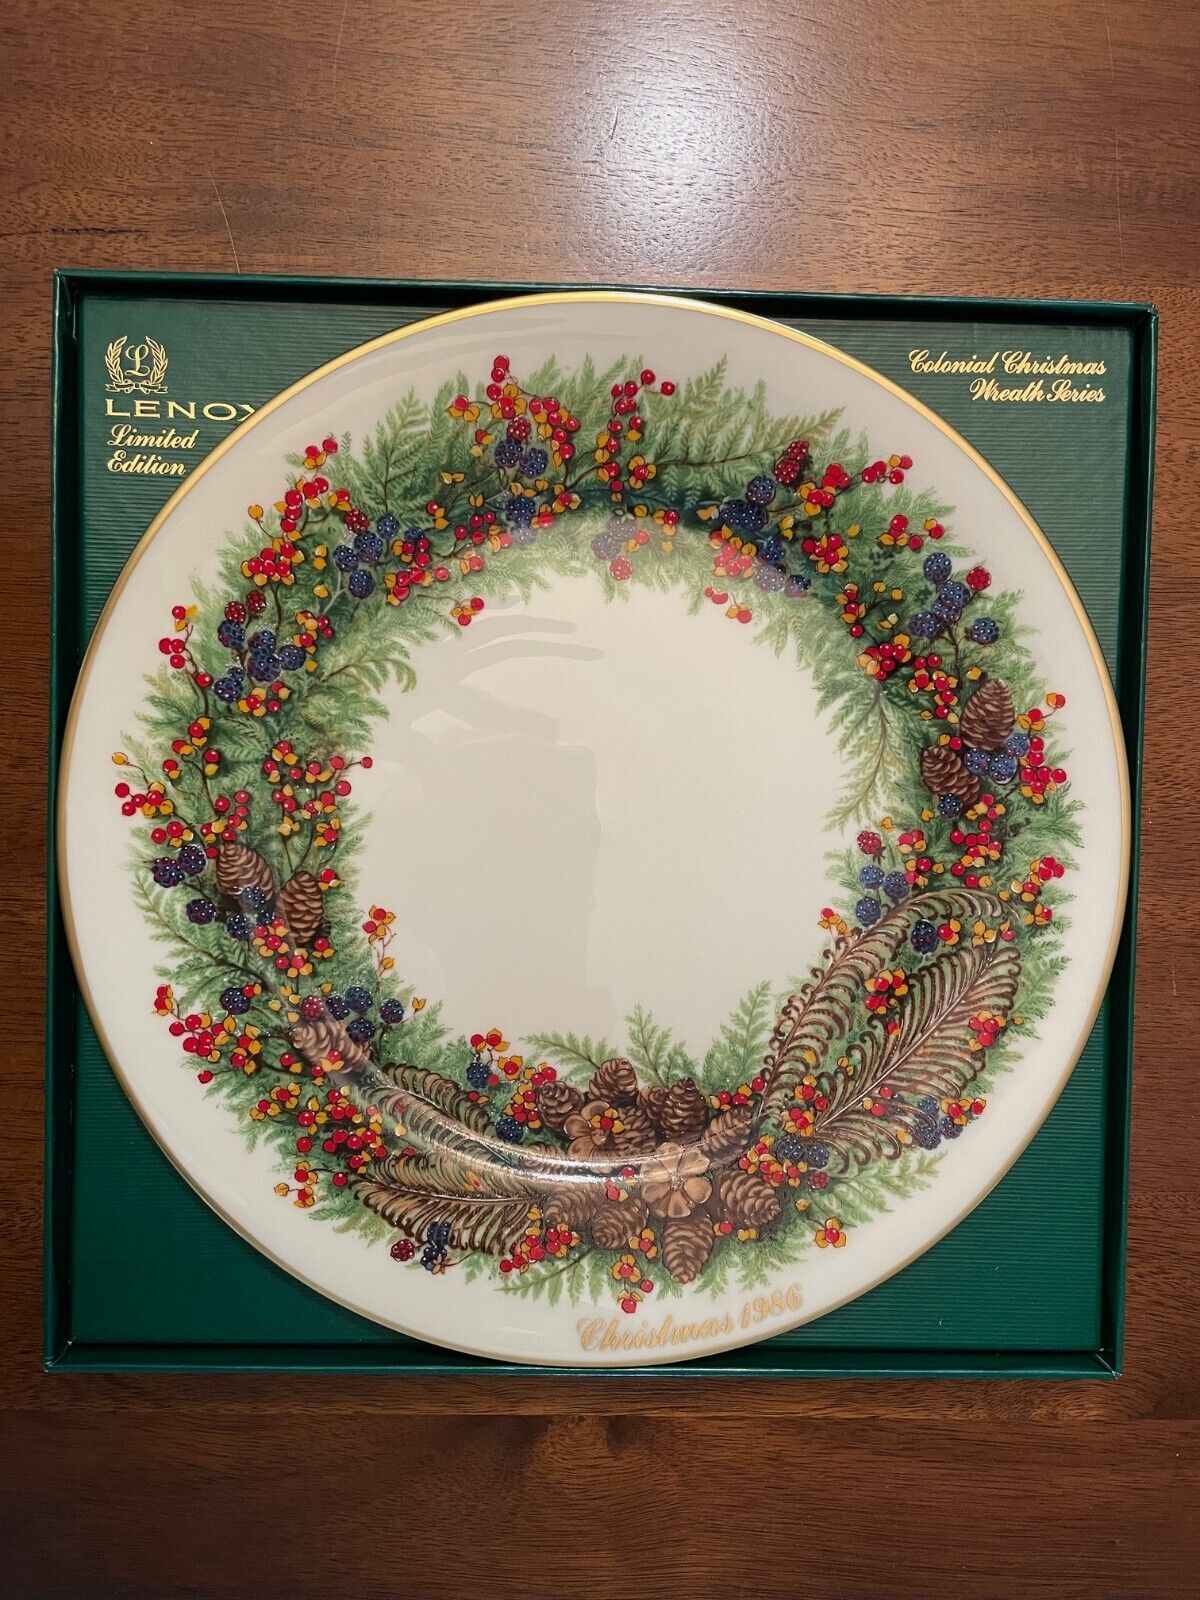 VTG 1986 LENOX Colonial Christmas Wreath Plate \